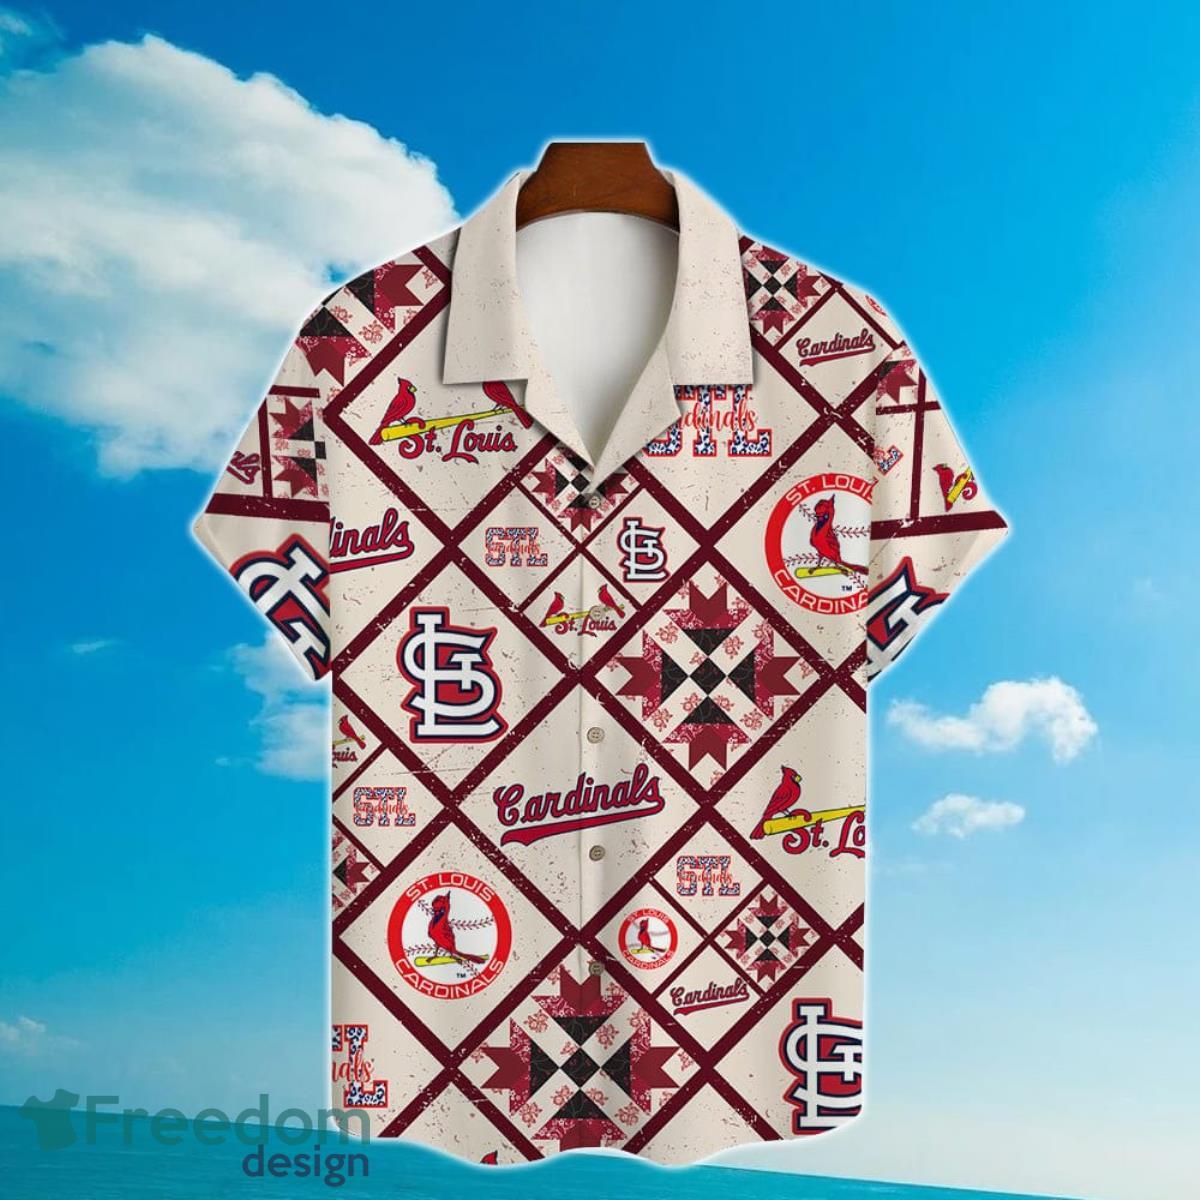 St. Louis Cardinals Mlb Set 3D Hawaiian Shirt And Short Gift For